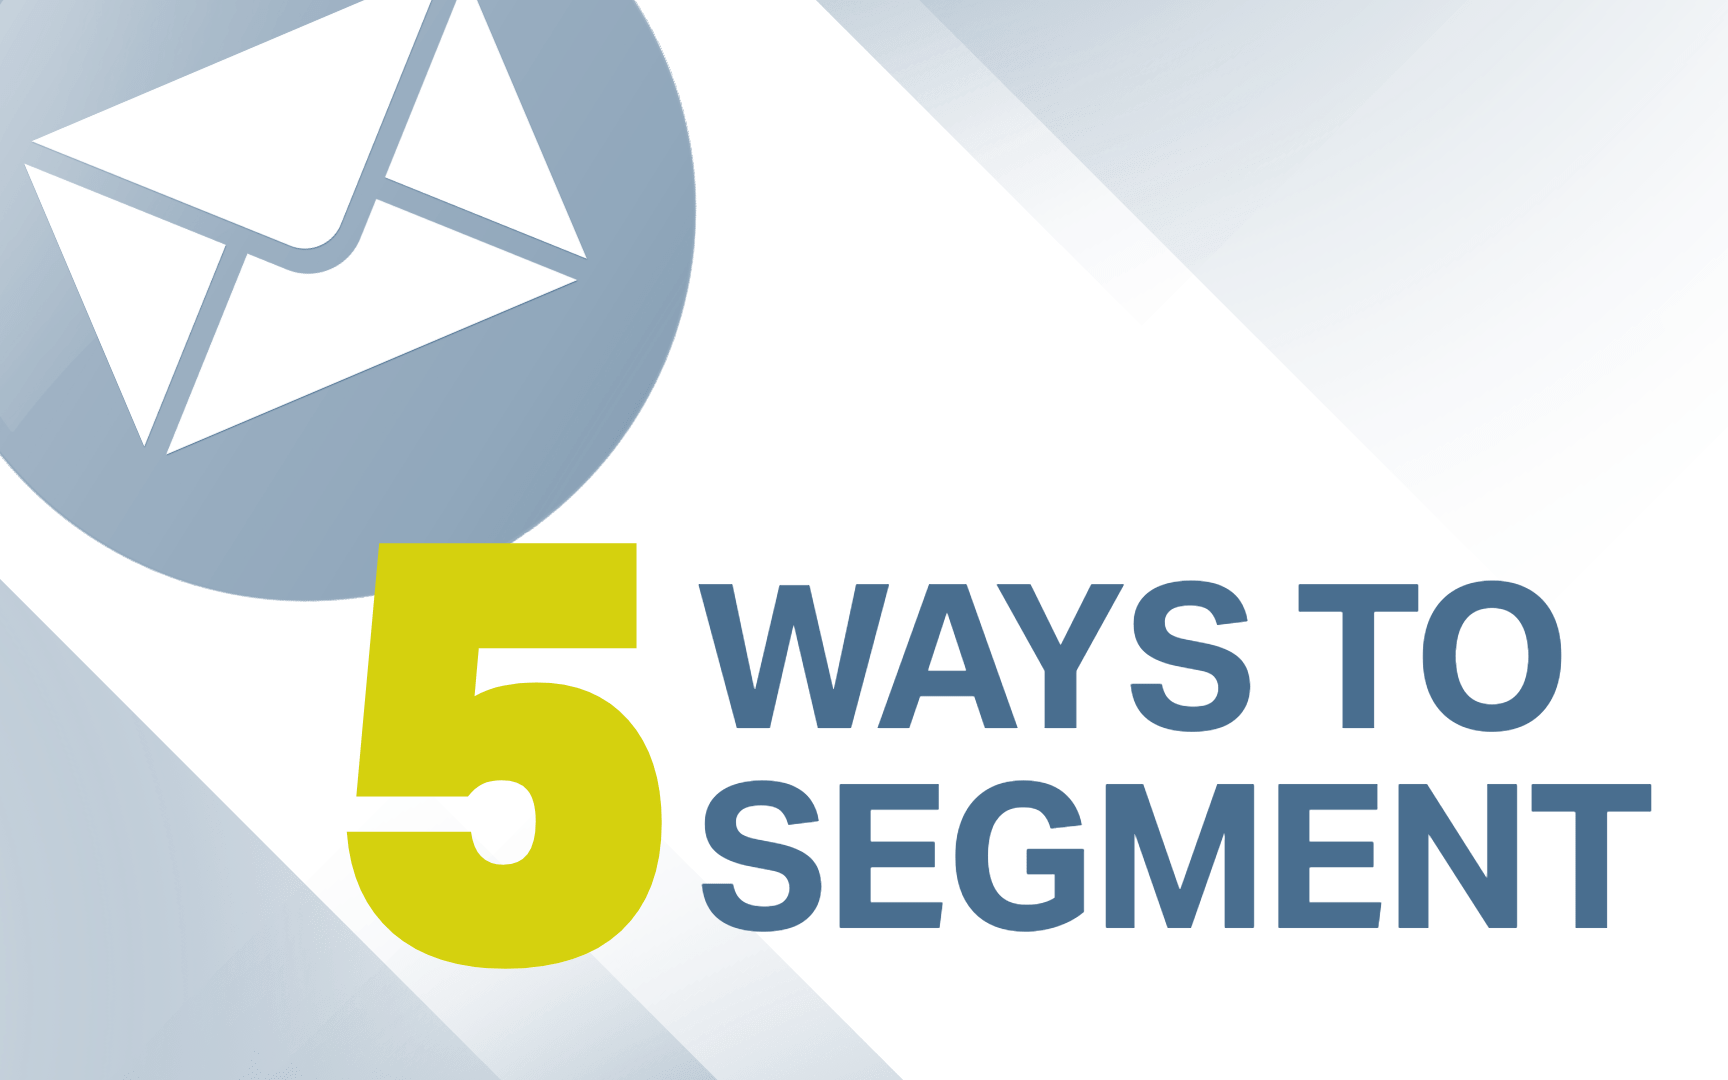 Graphic with envelope icon that says "5 ways to segment"